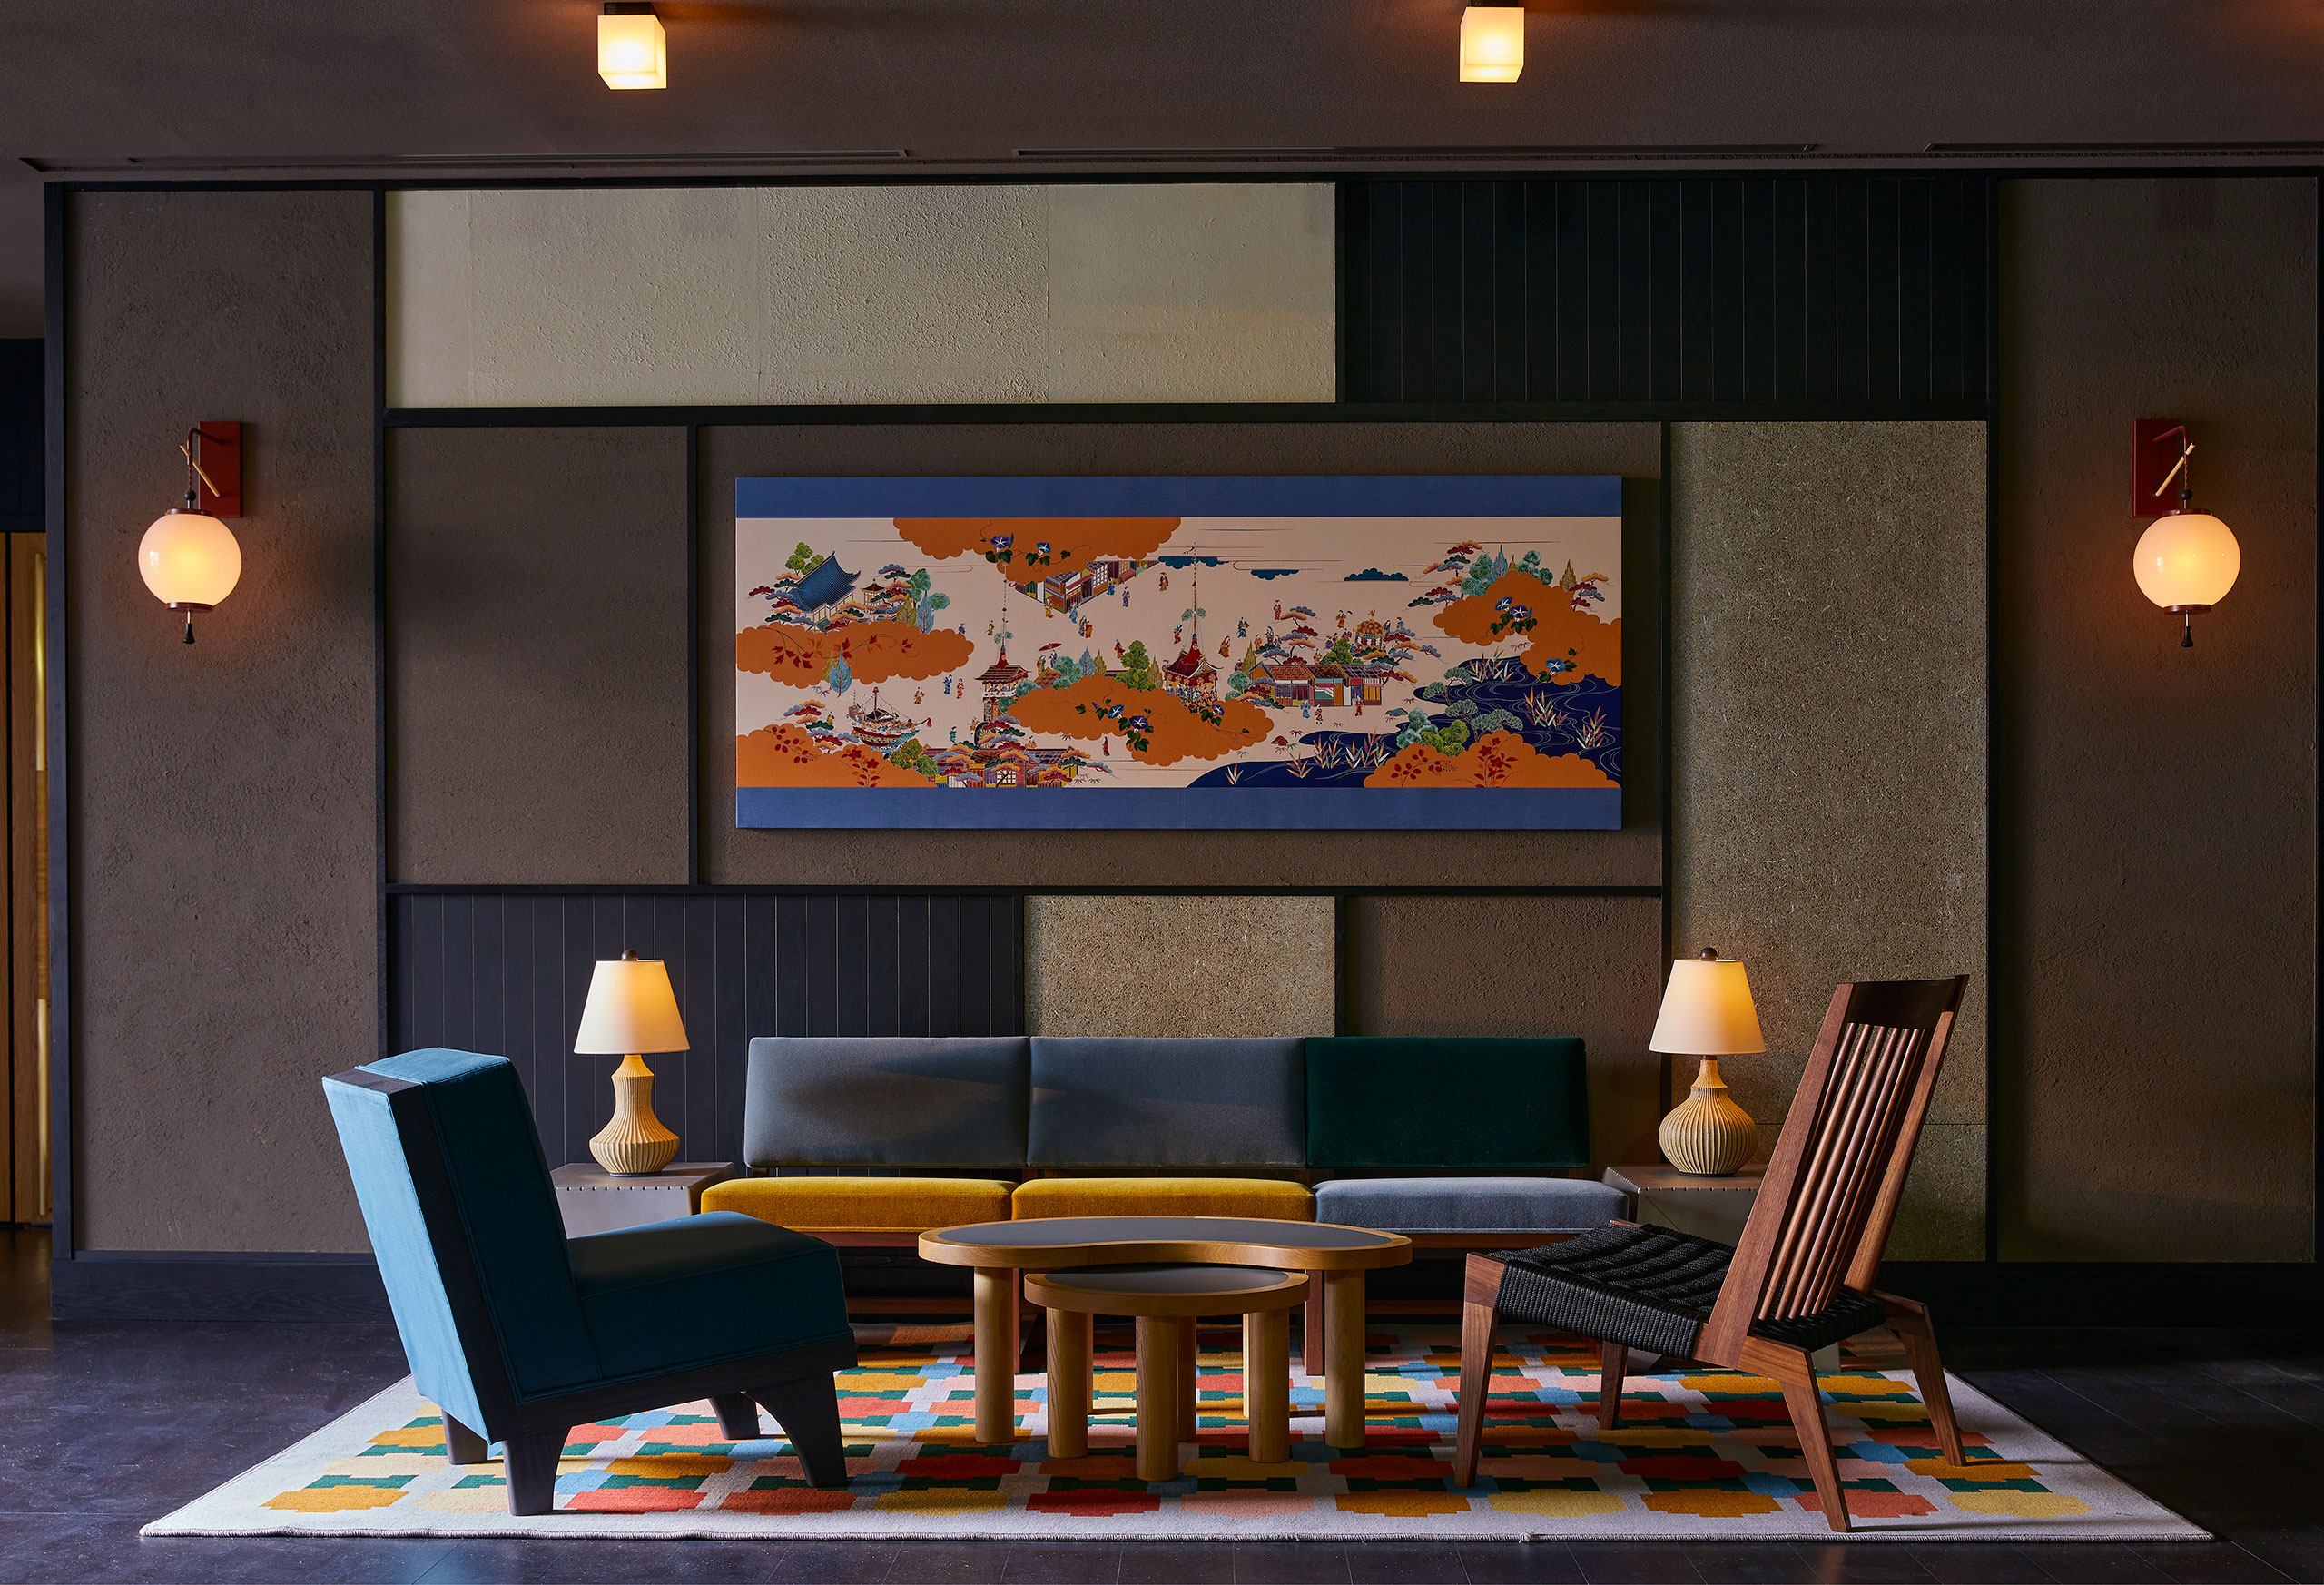 Ace Hotel Kyoto.
Pre-function room.
Photo by Yoshihiro Makino.